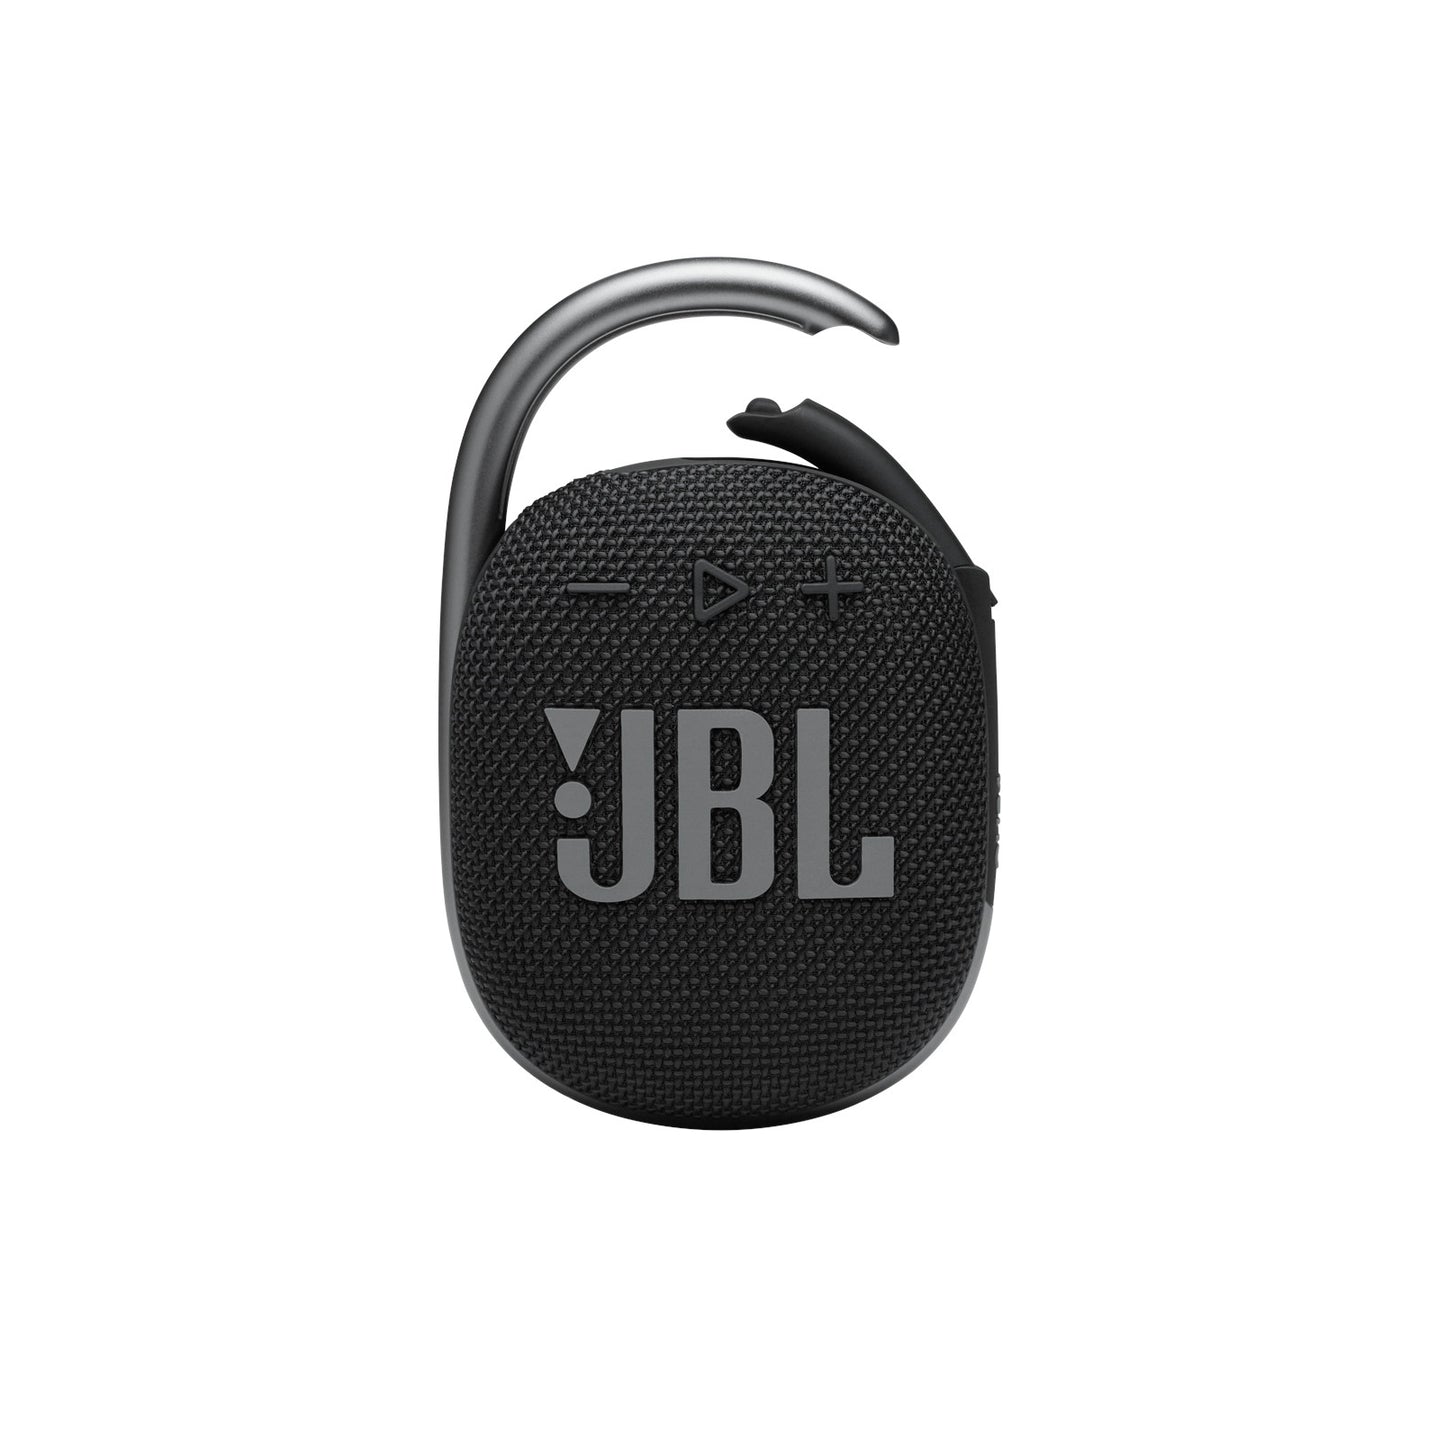 JBL Clip 4 Ultra-Portable Waterproof Speaker - Black